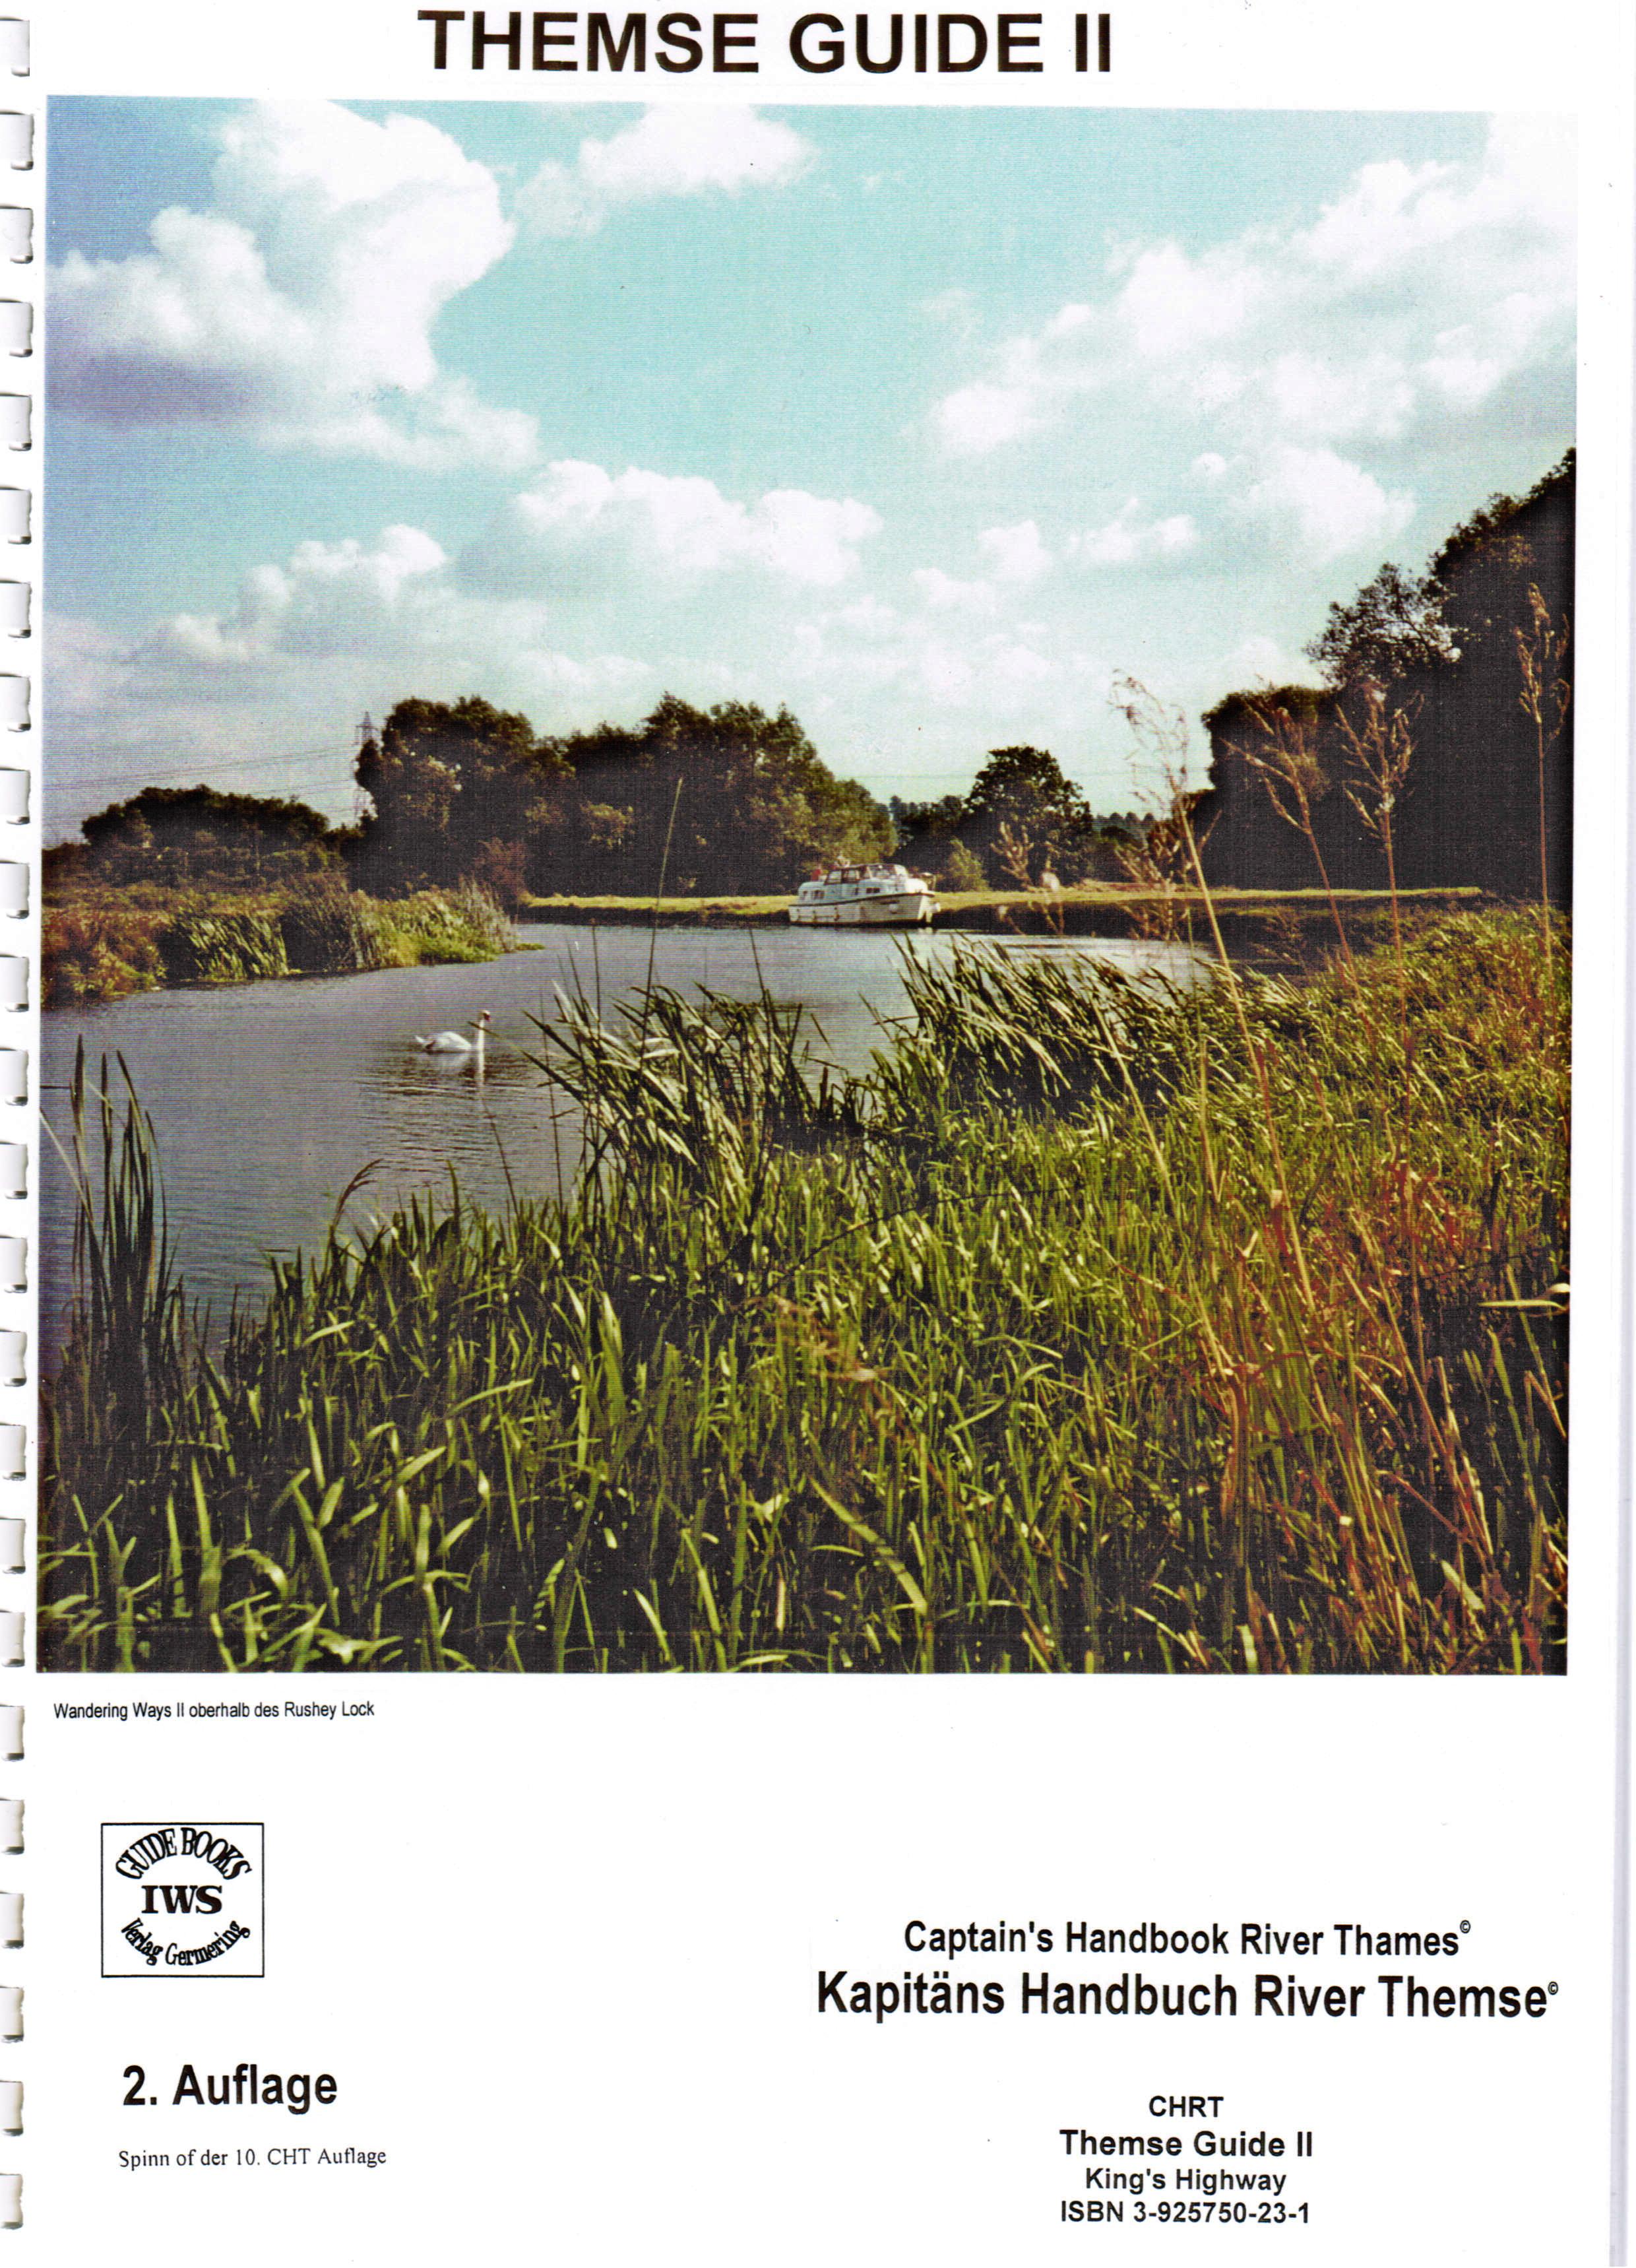 River Thames (Themse), THames Guide II, (c) IWS Verlag/RJS 2000